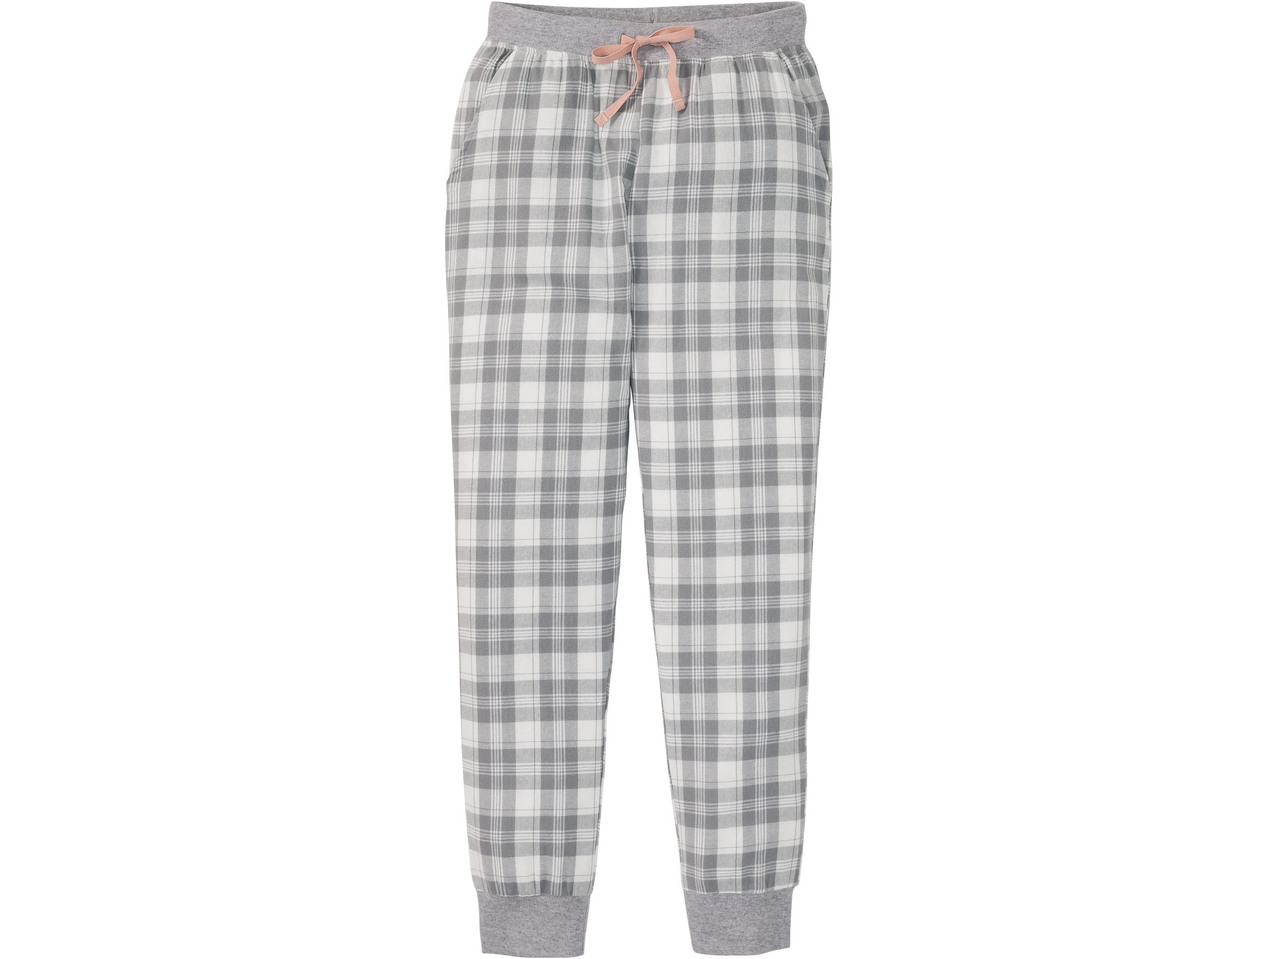 Ladies' or Men's Pyjamas